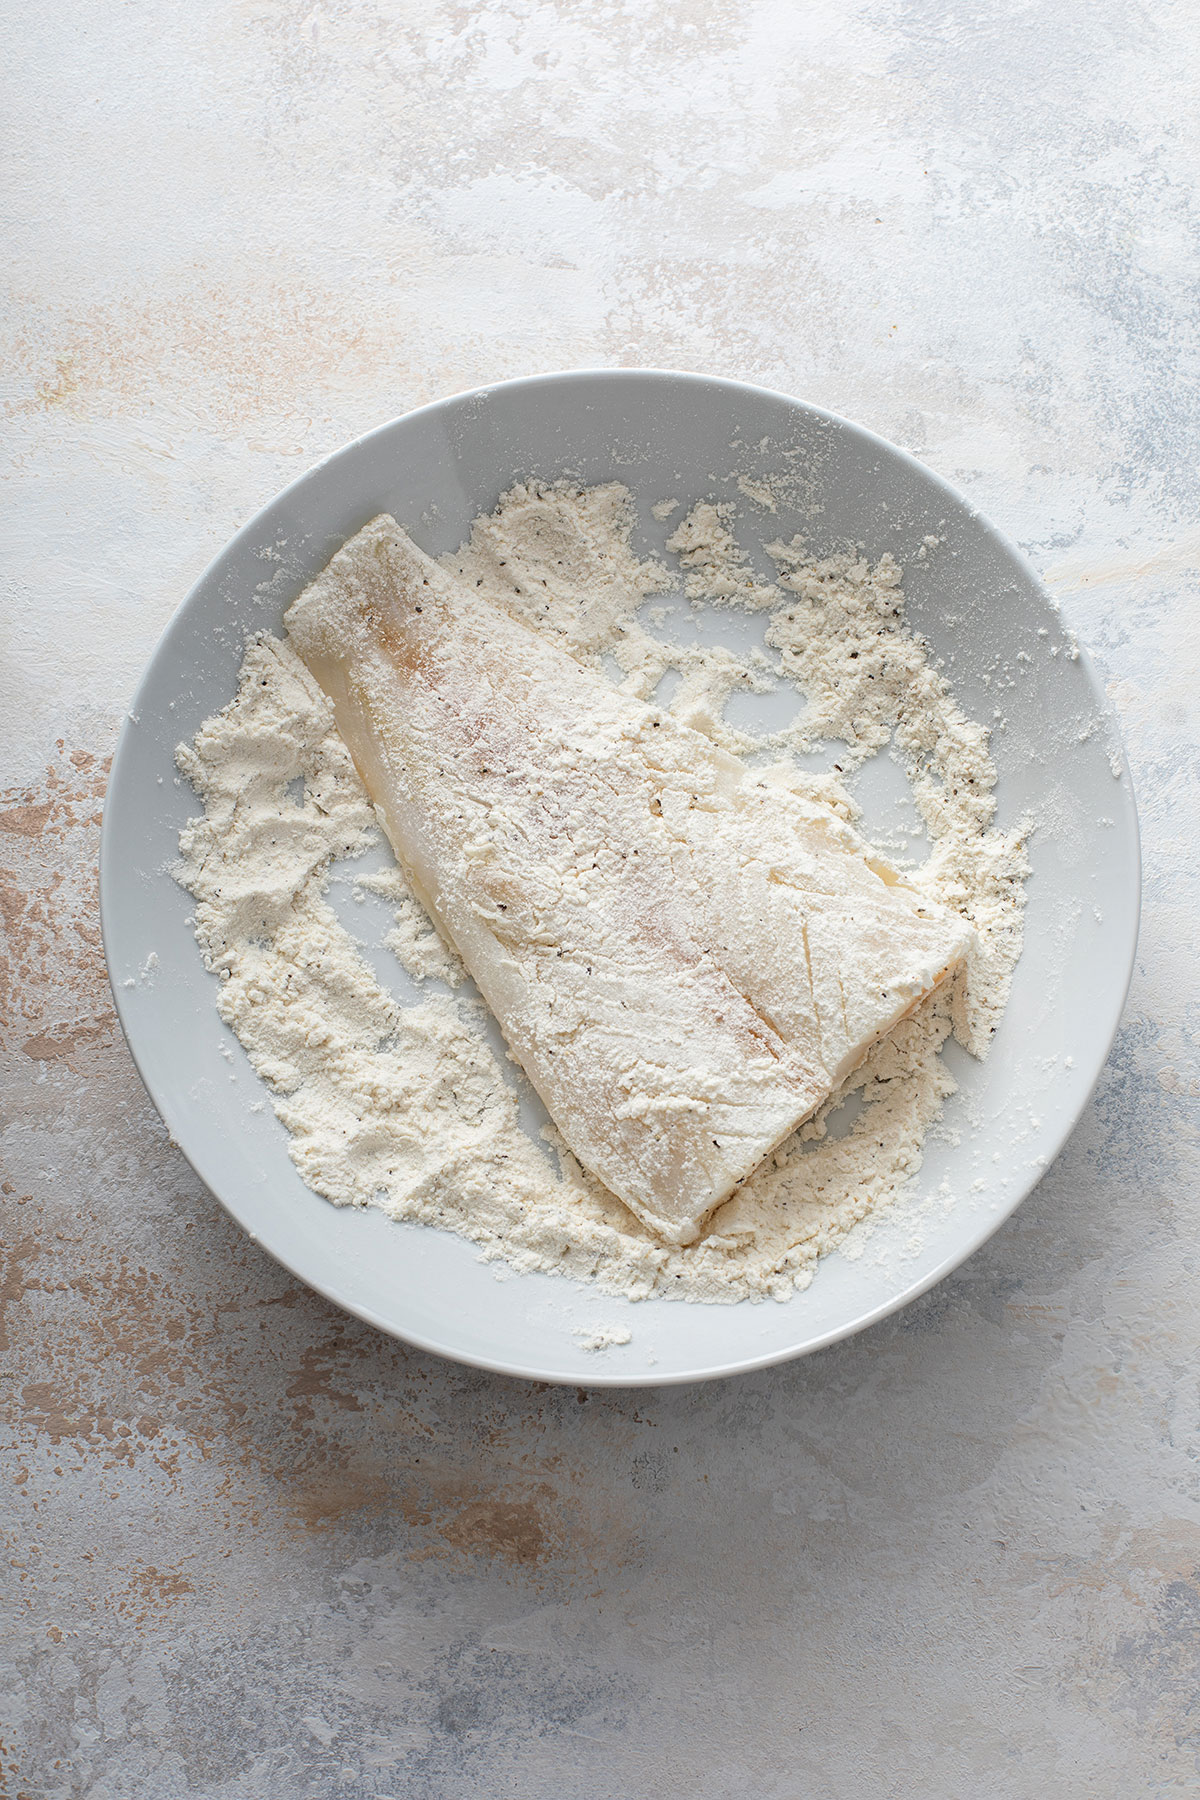 Cod fish fillets getting dredge in flour